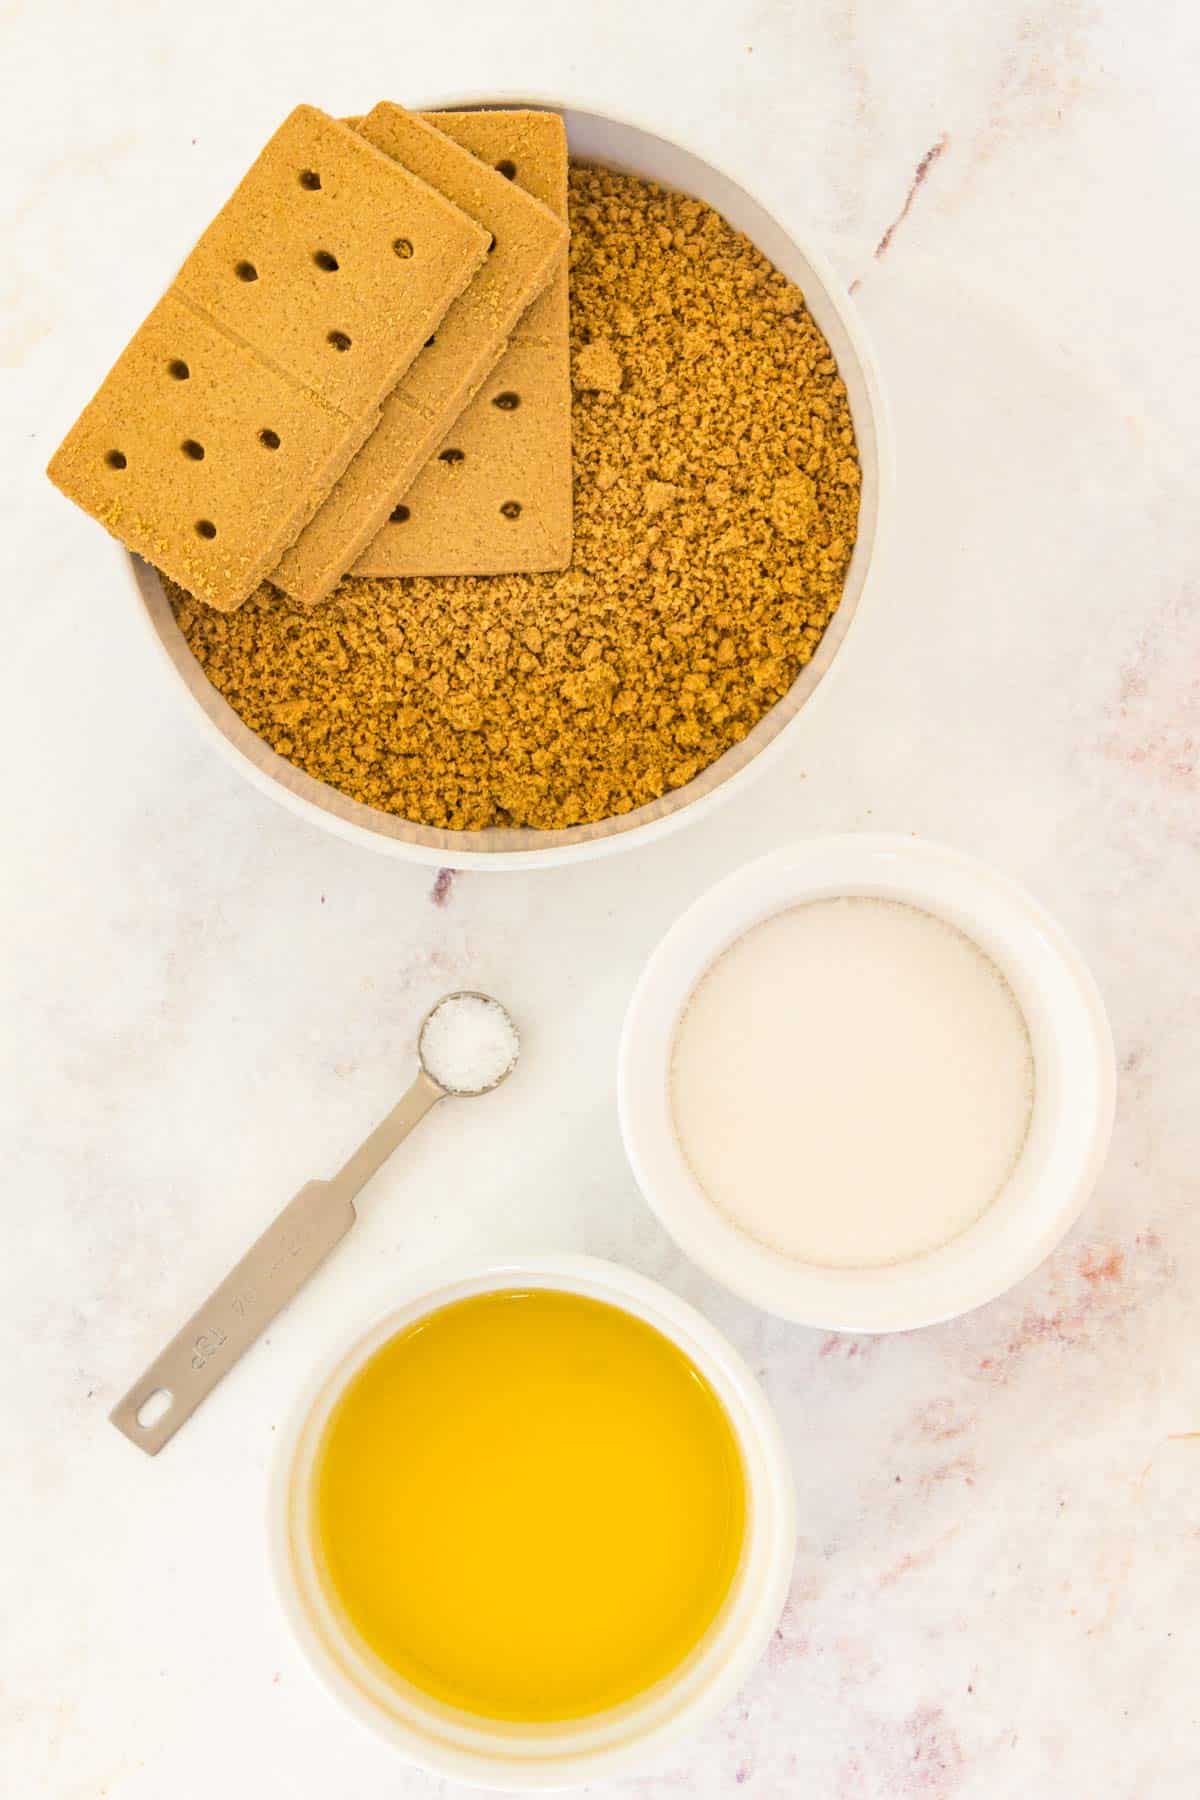 The ingredients for homemade gluten-free graham cracker crust.